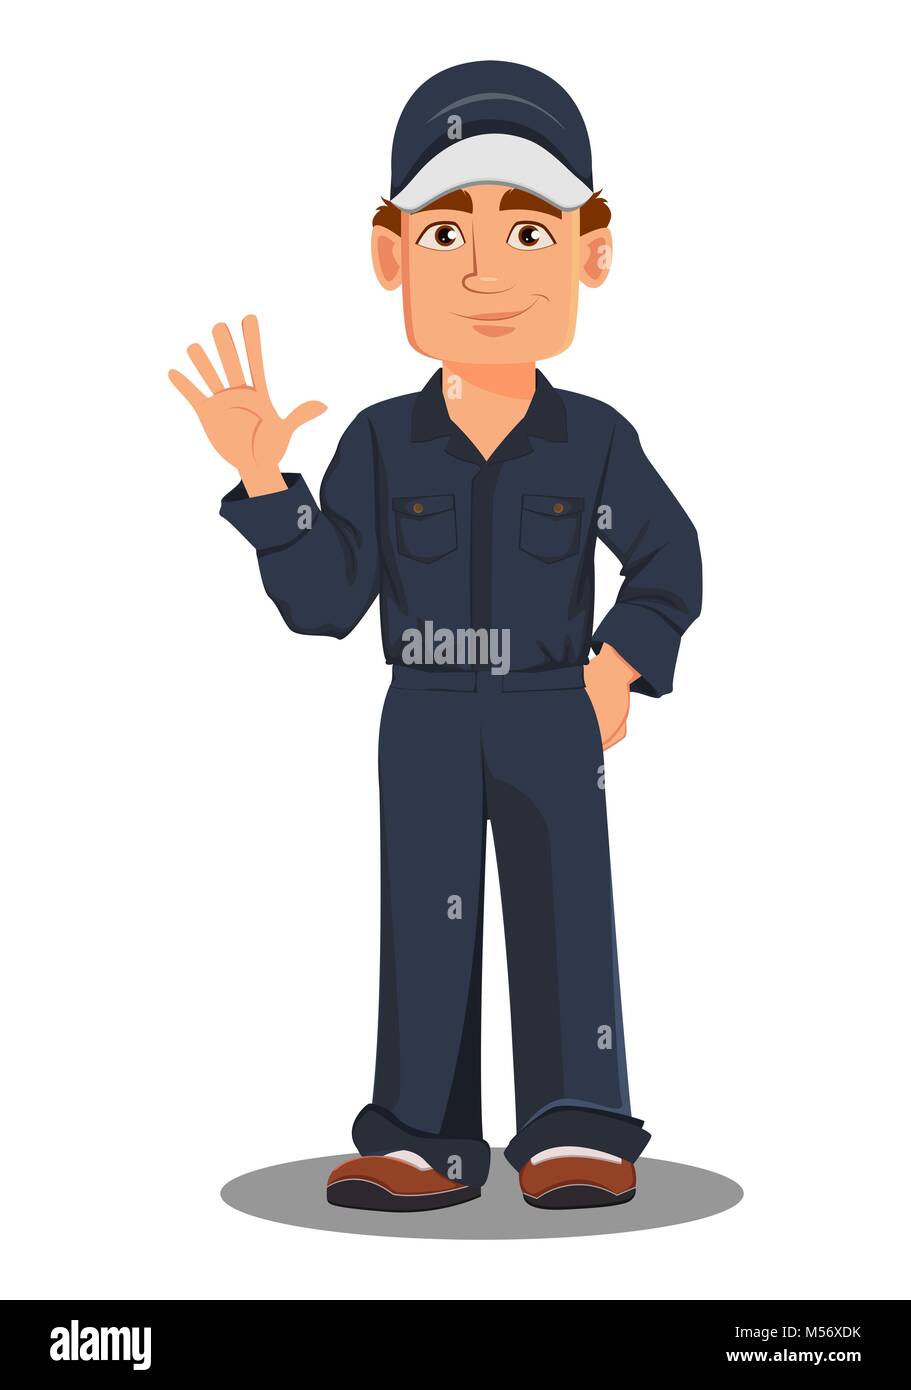 Professional auto mechanic in uniform. Smiling cartoon character waving hand. Expert service worker. Vector illustration Stock Vector